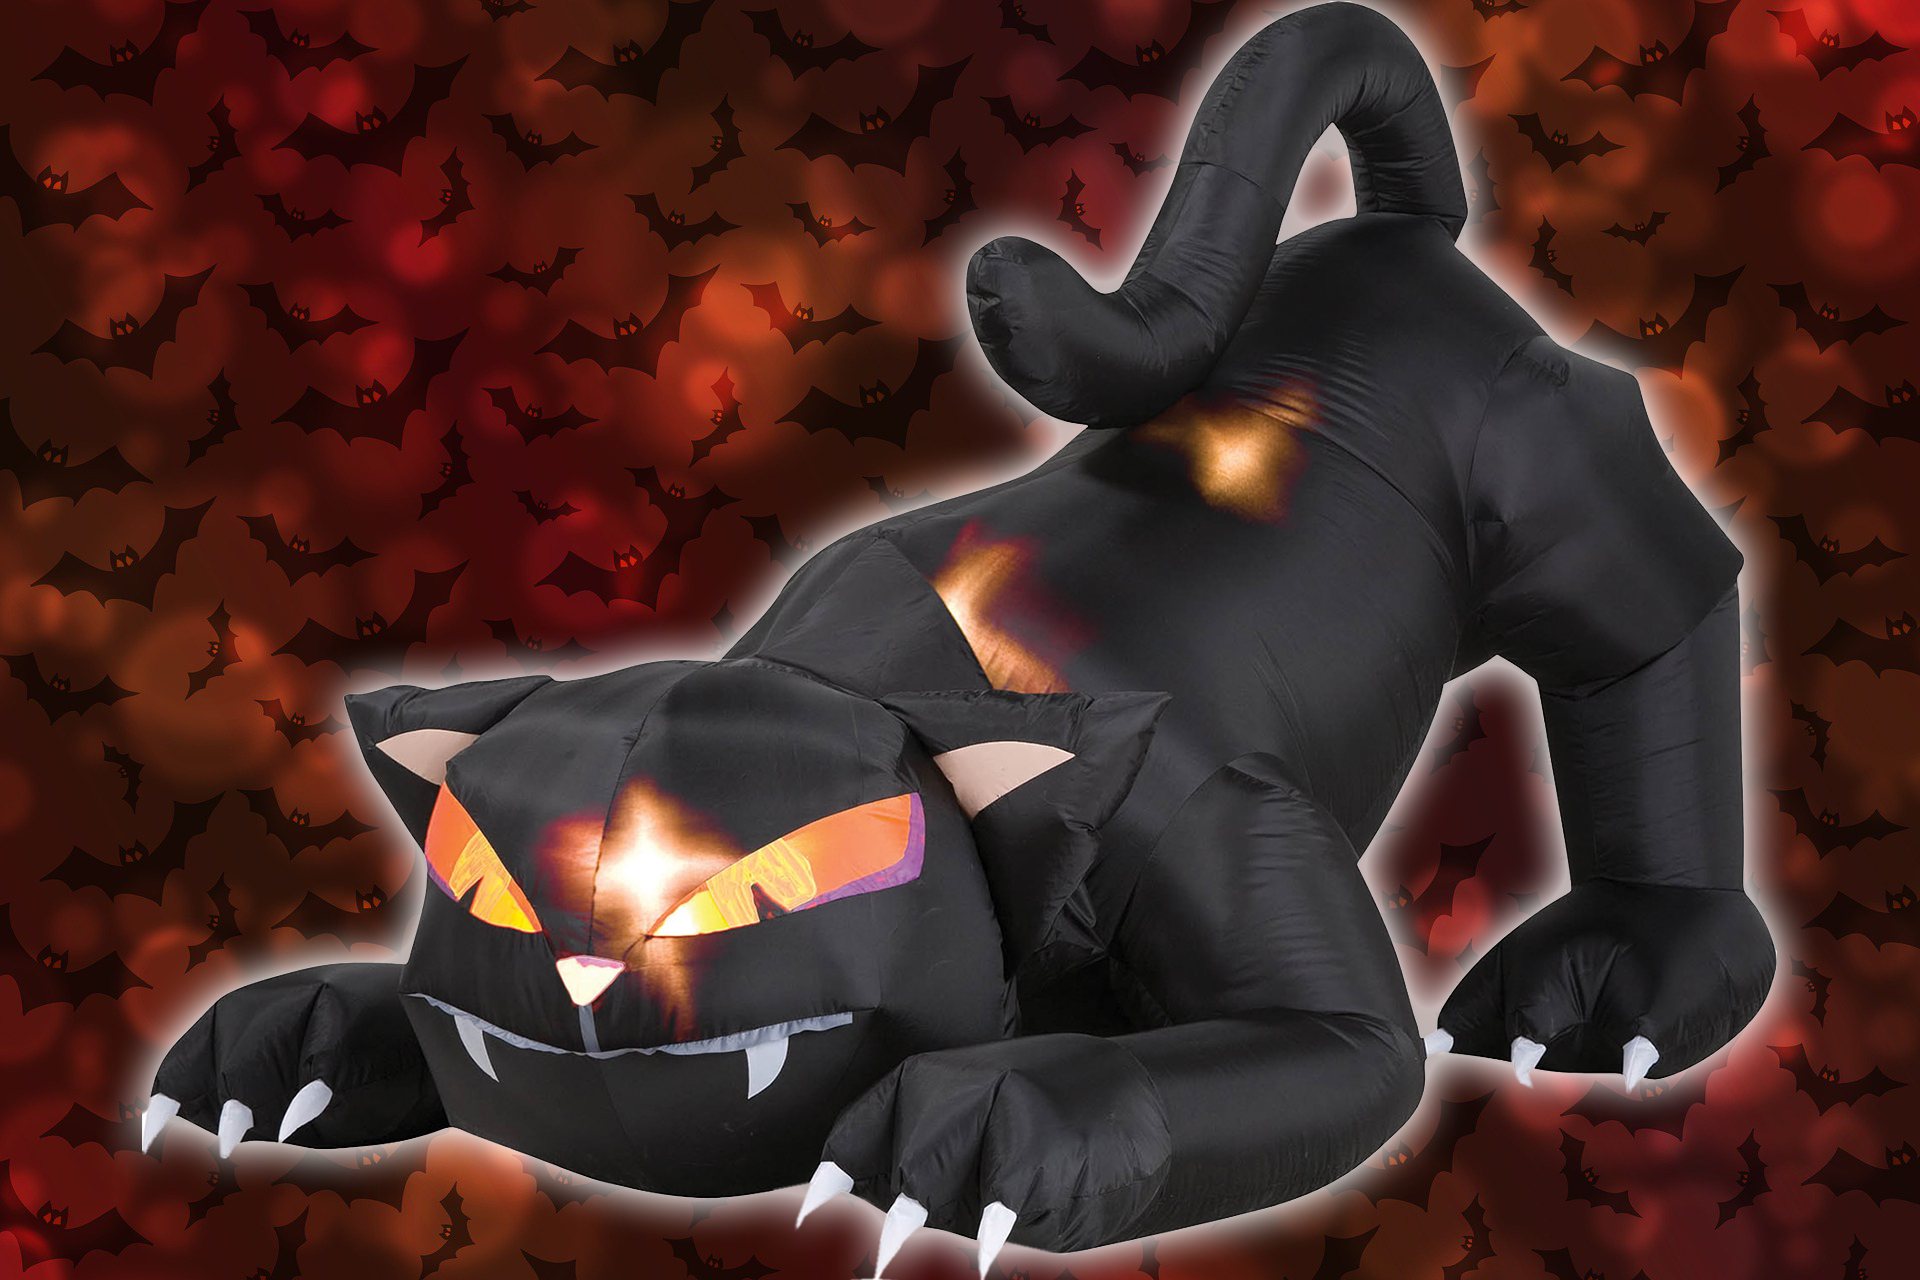 Inflatable Black Cat